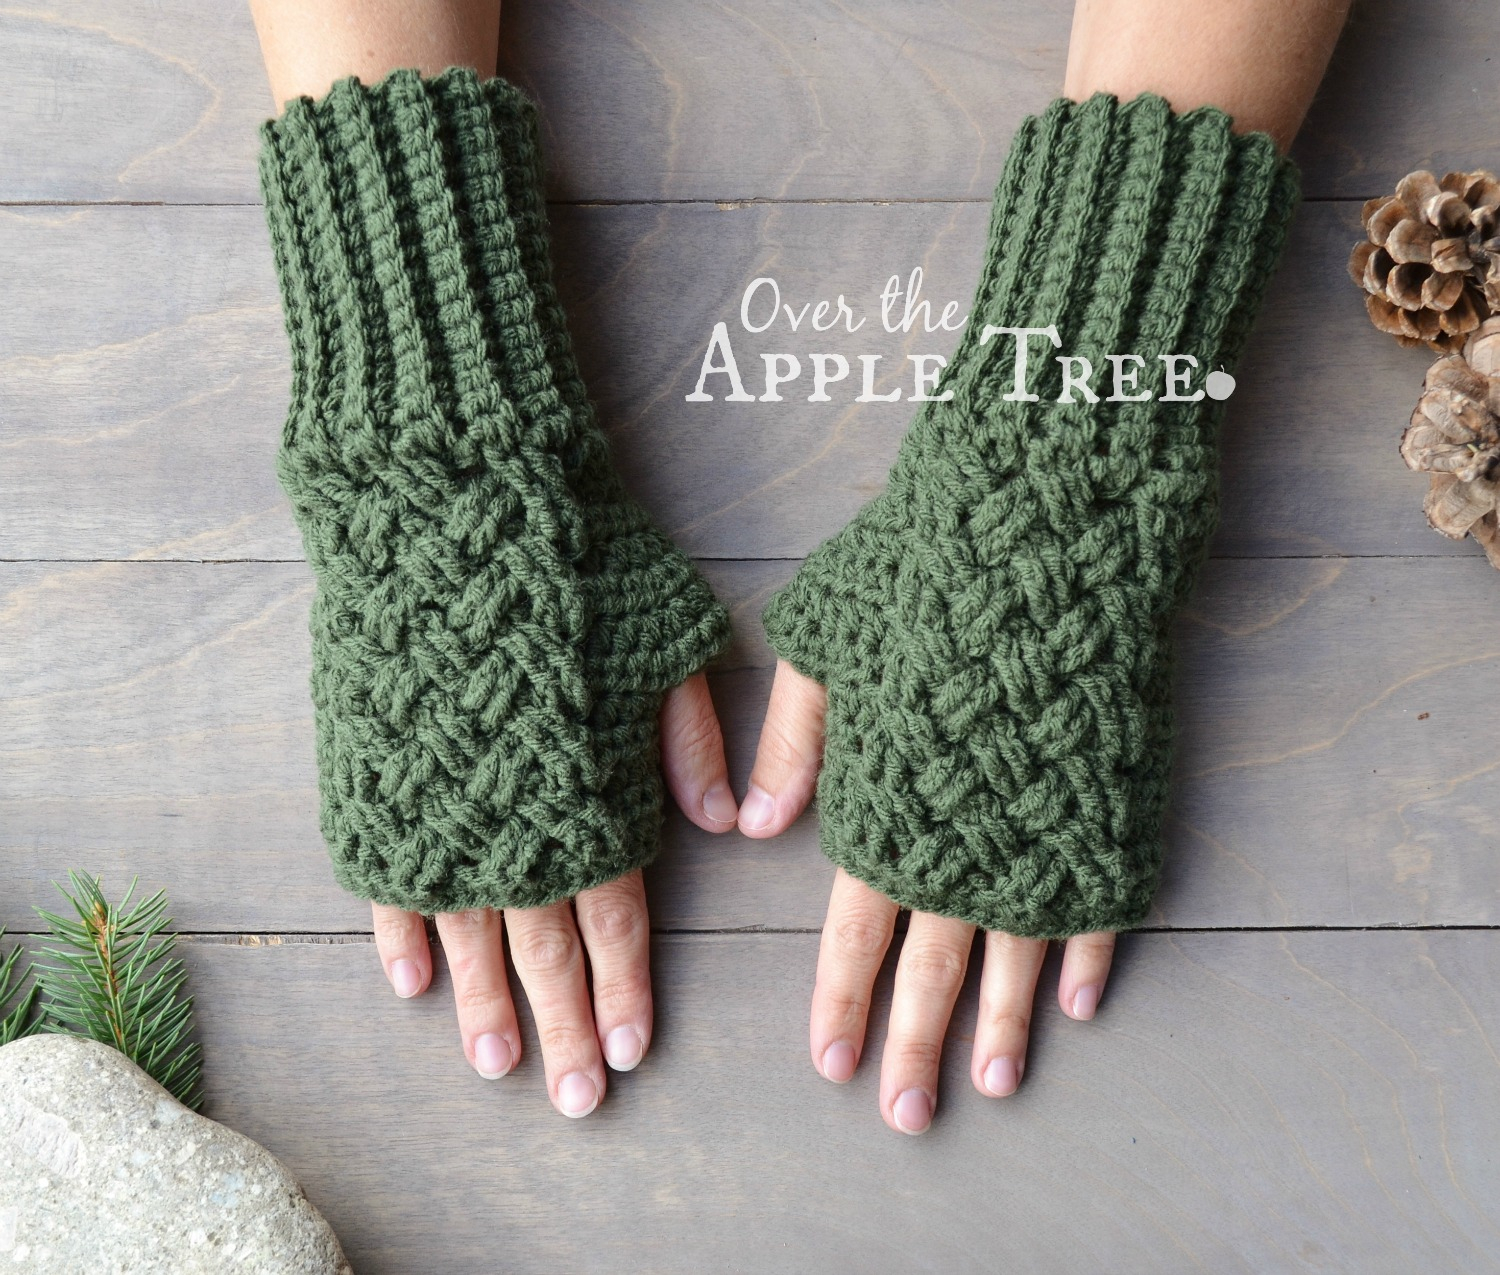 Crochet Gloves Pattern With Fingers Over The Apple Tree Celtic Weave Fingerless Gloves Free Pattern